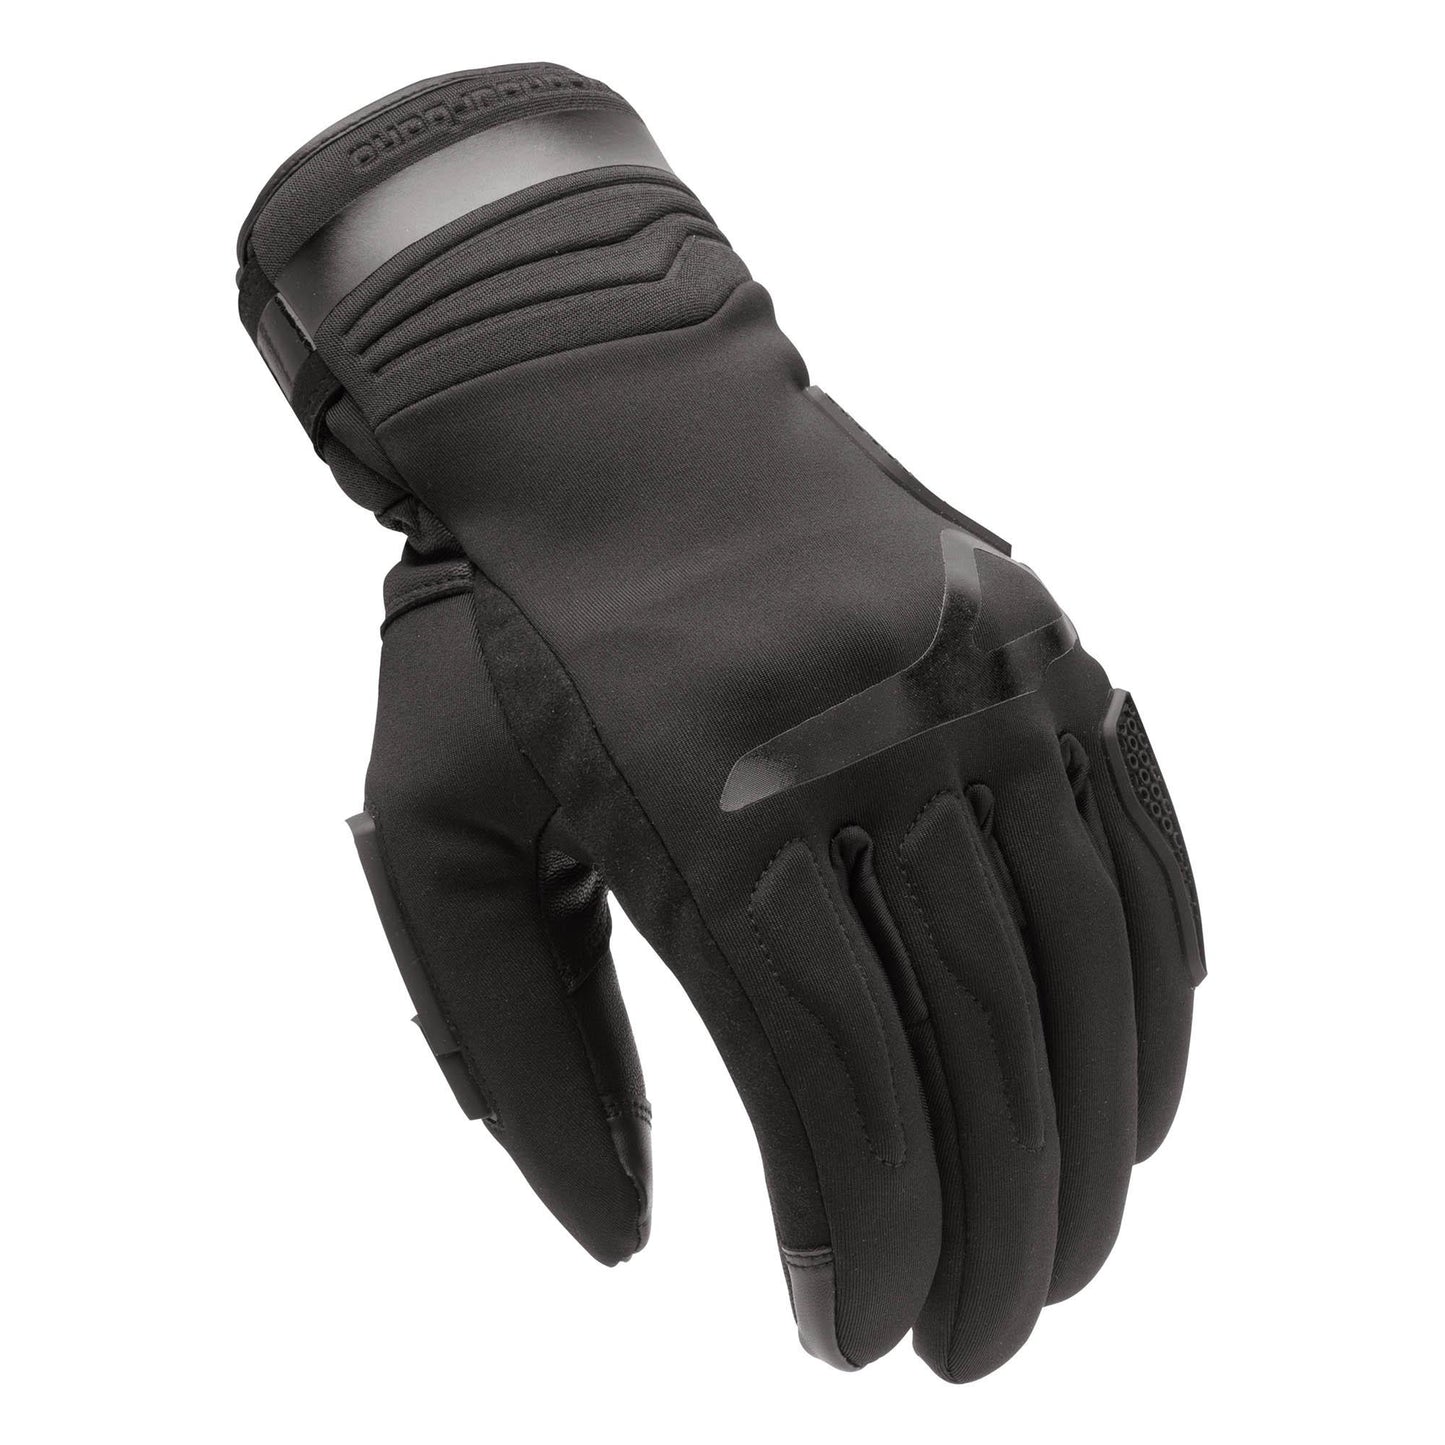 Tucano Urbano Winter Gloves - Target Hydroscud®